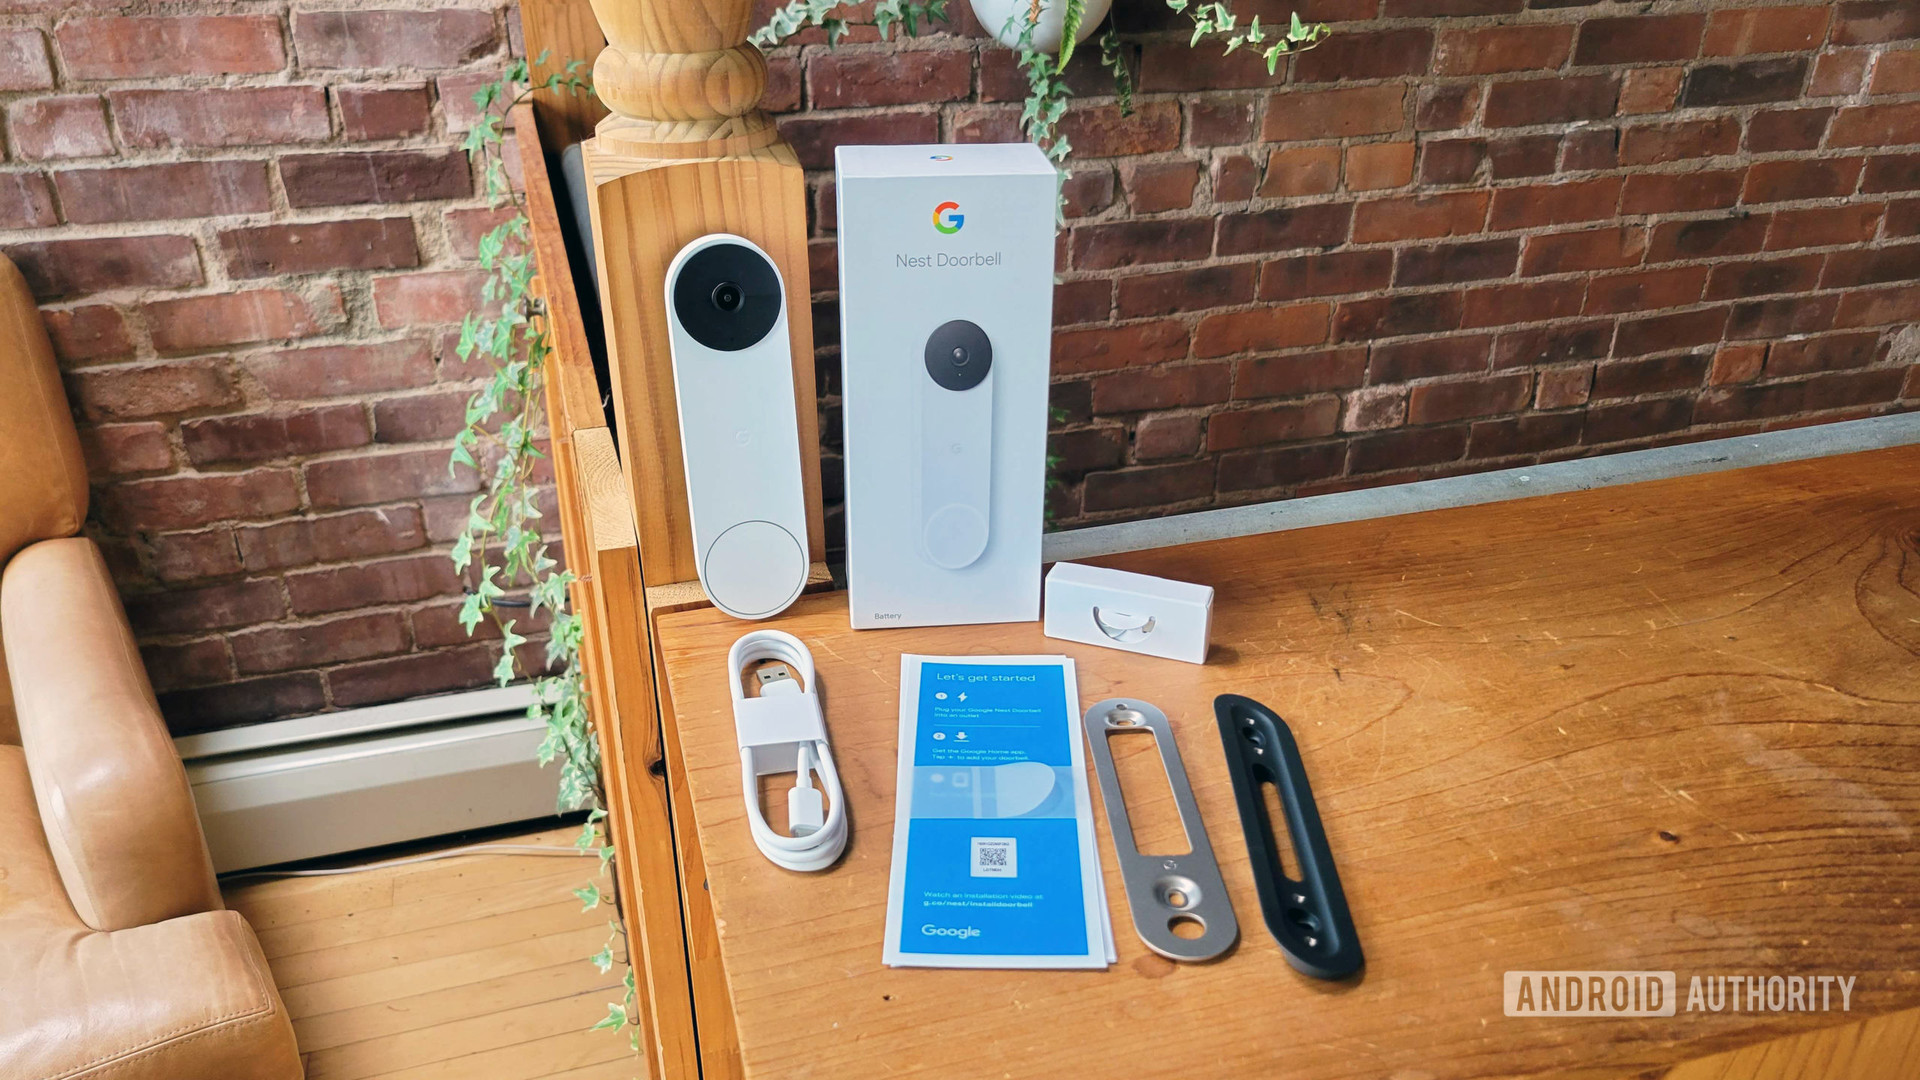 Google Nest Doorbell Review Retail In Box Contents